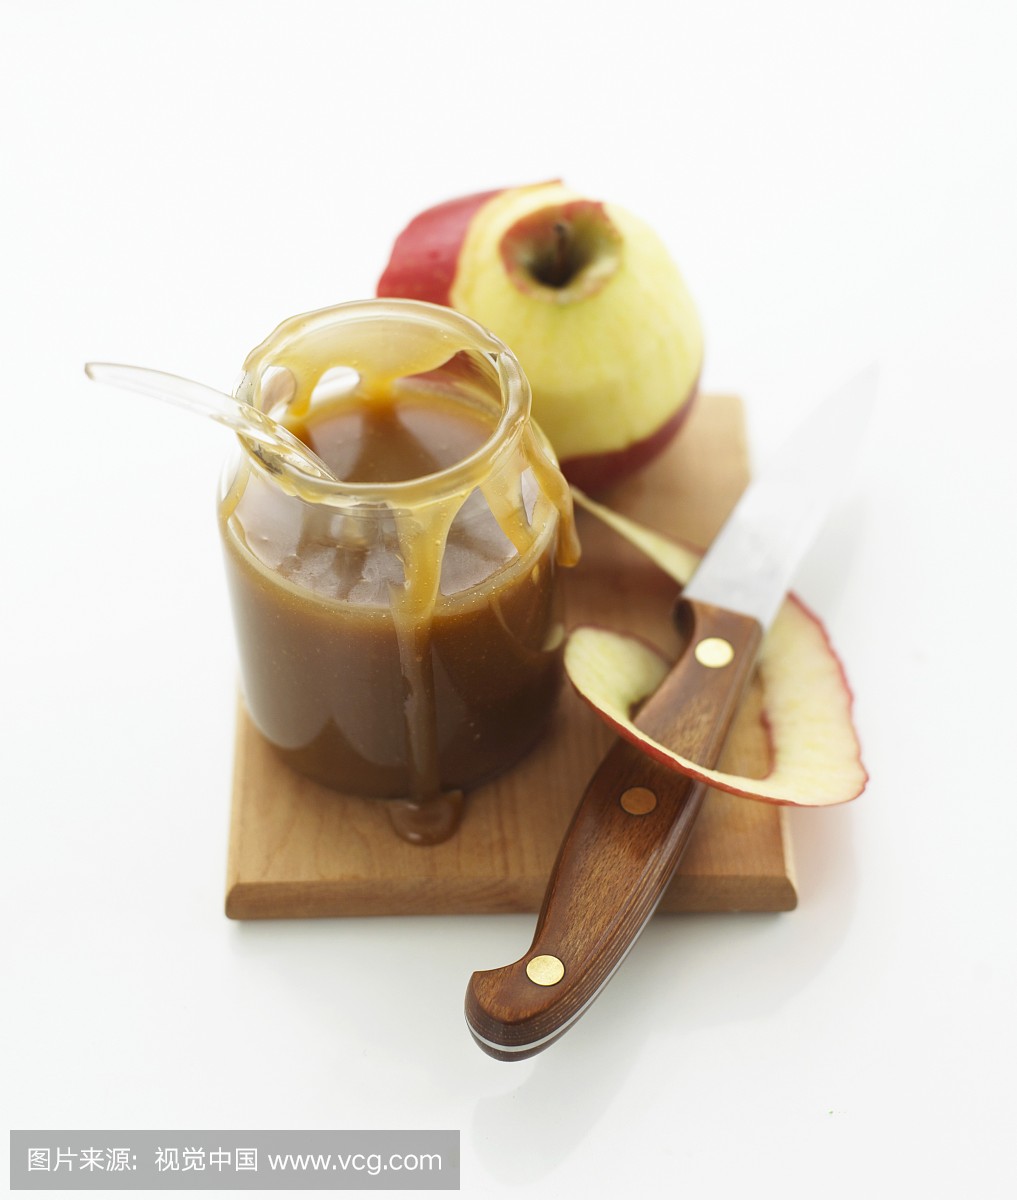 Apple caramel sauce in jar and peeled apple o